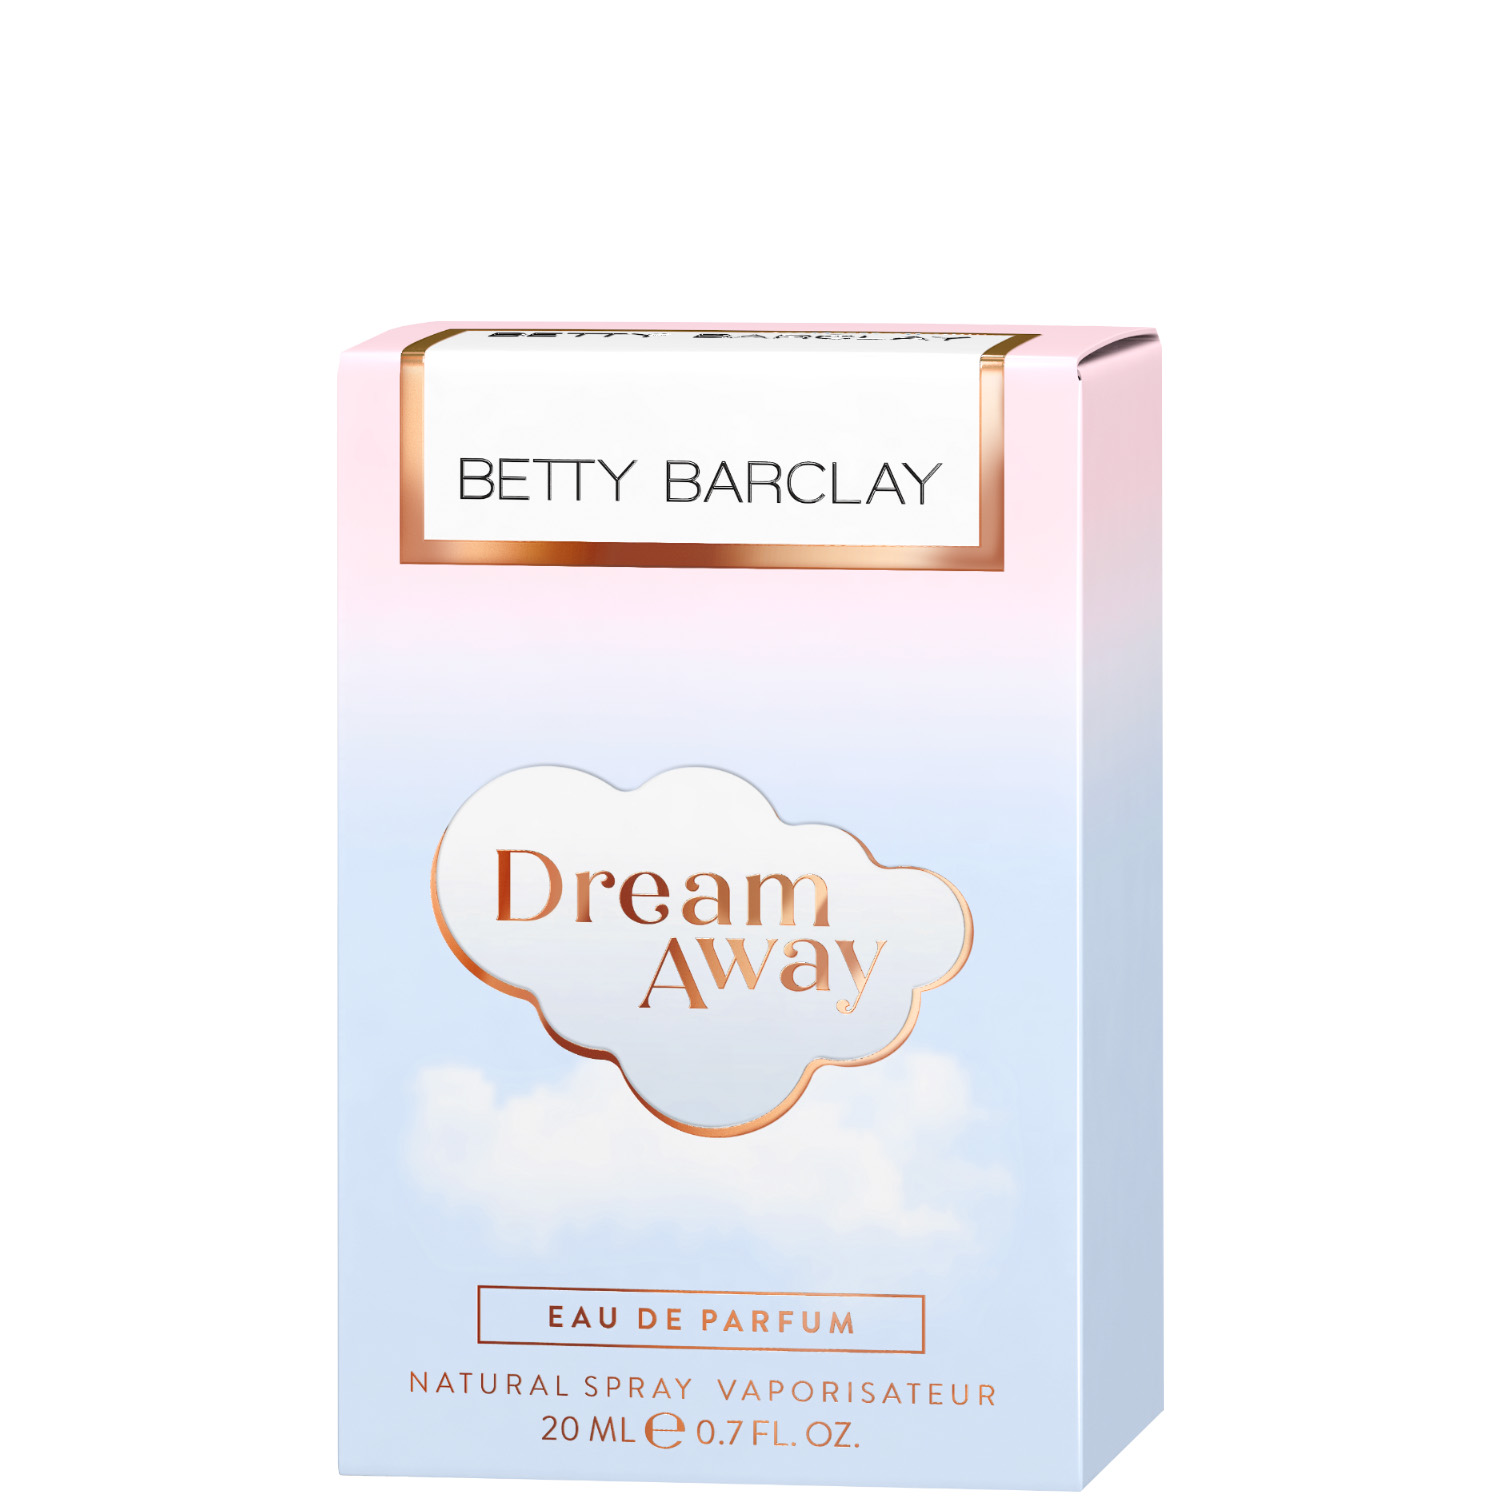 Betty Barclay Dream Away Eau de Parfum 20ml